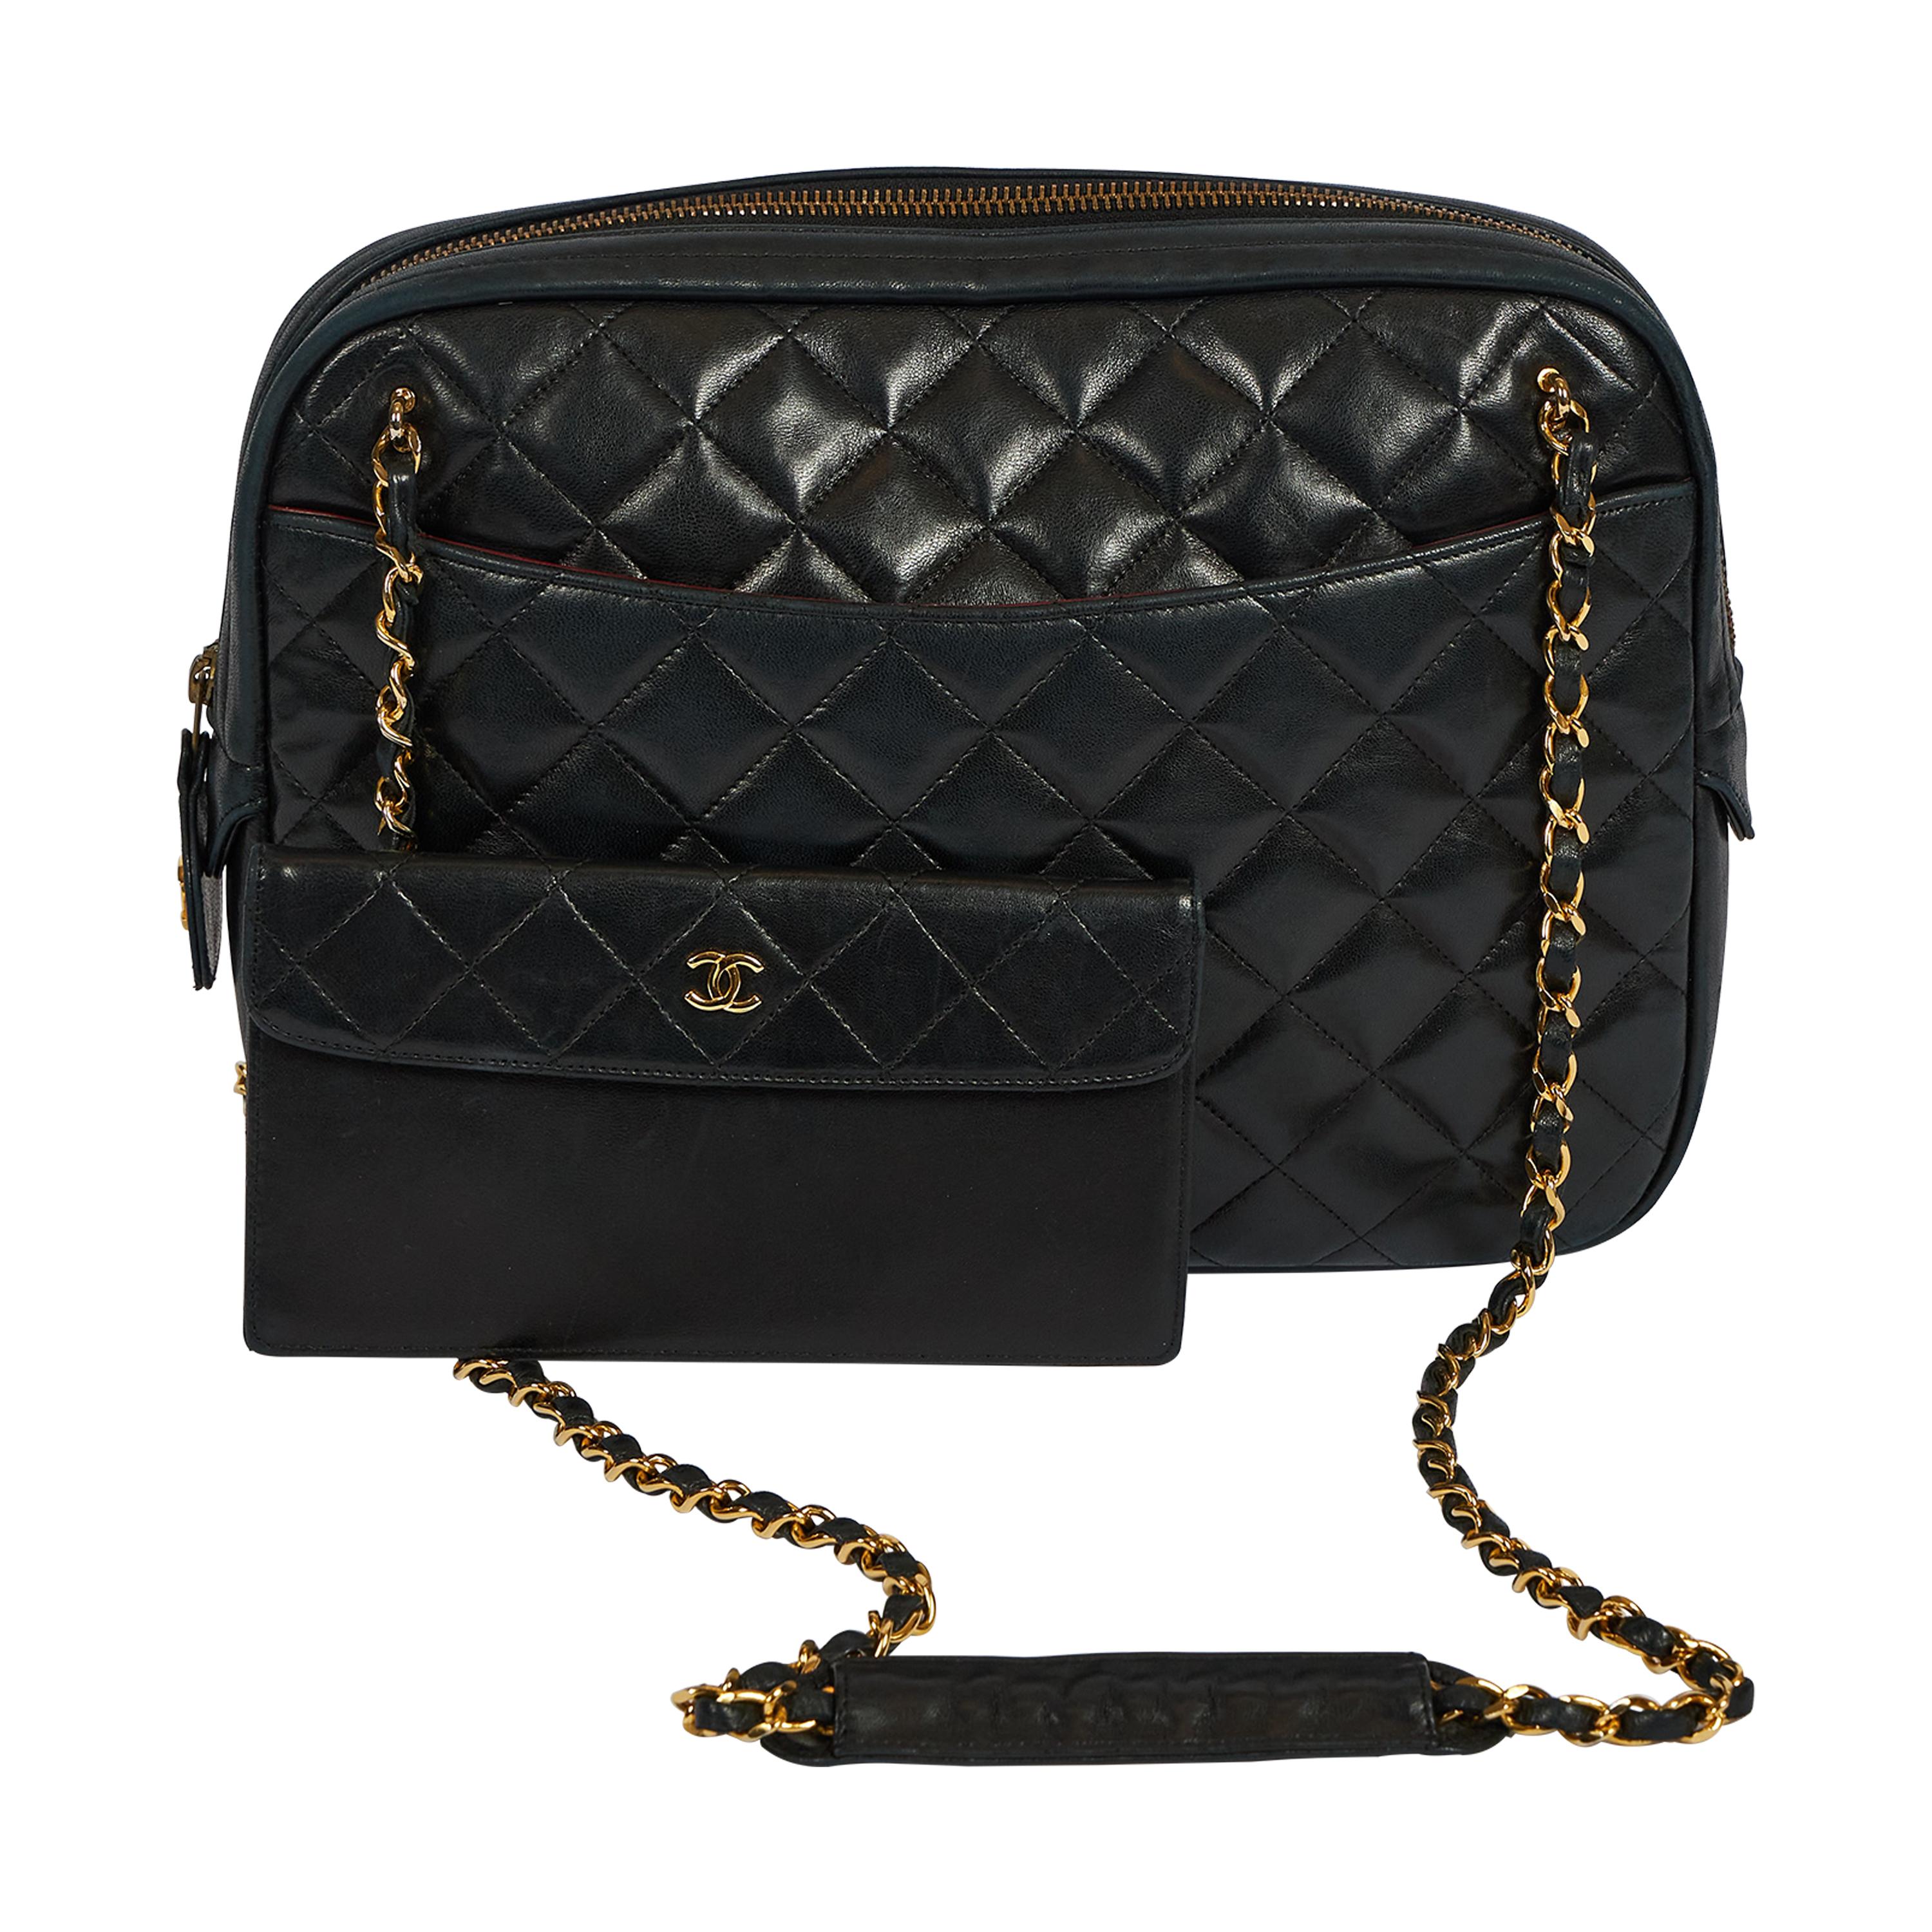 90's Chanel Vintage Black Quilted Leather Shoulder Bag with Wallet